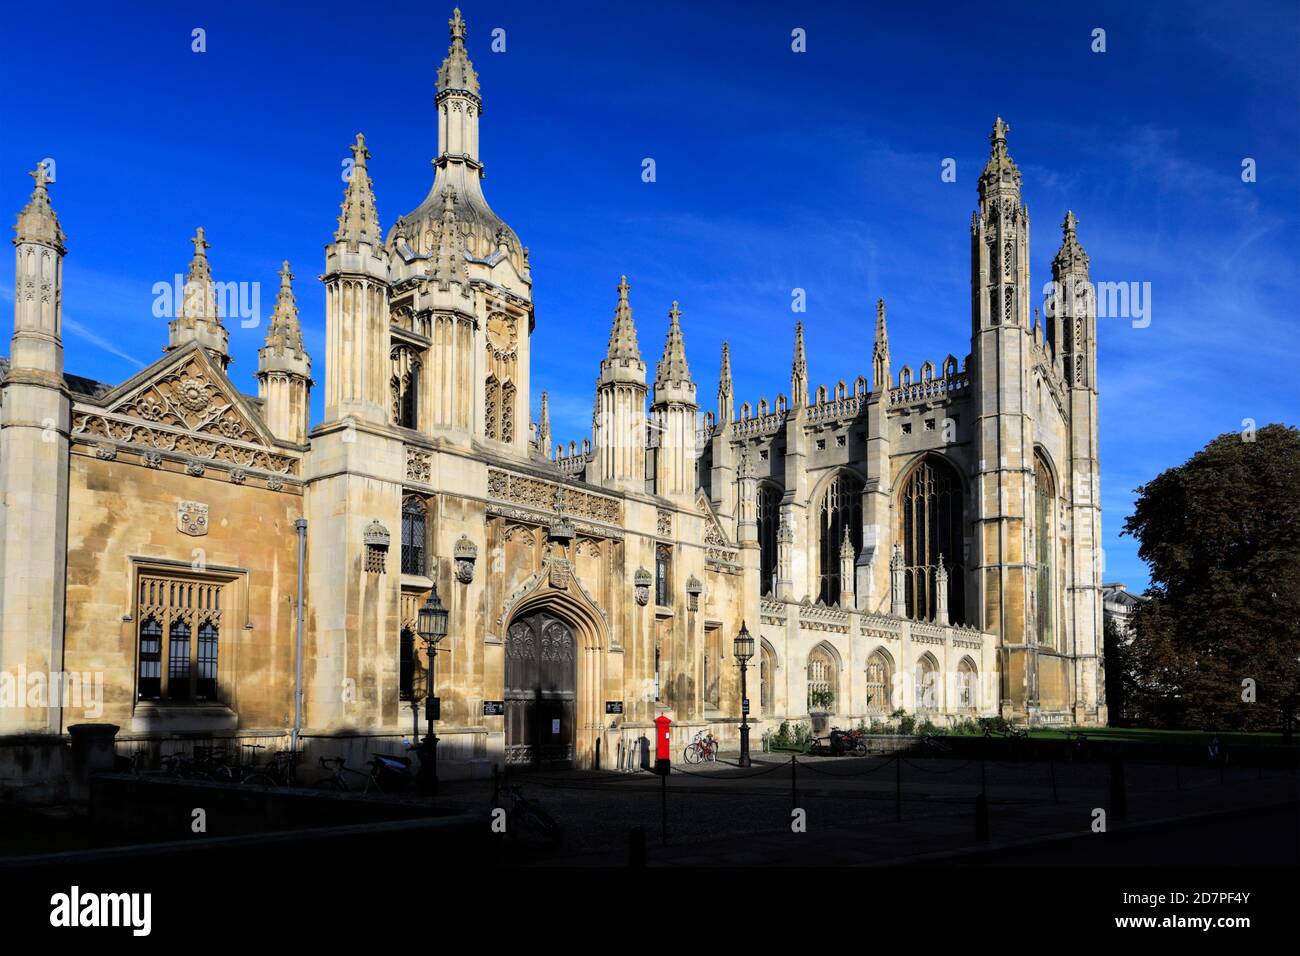 View of Kings College, Kings Parade, Cambridge City, Cambridgeshire, England, UK Stock Photo